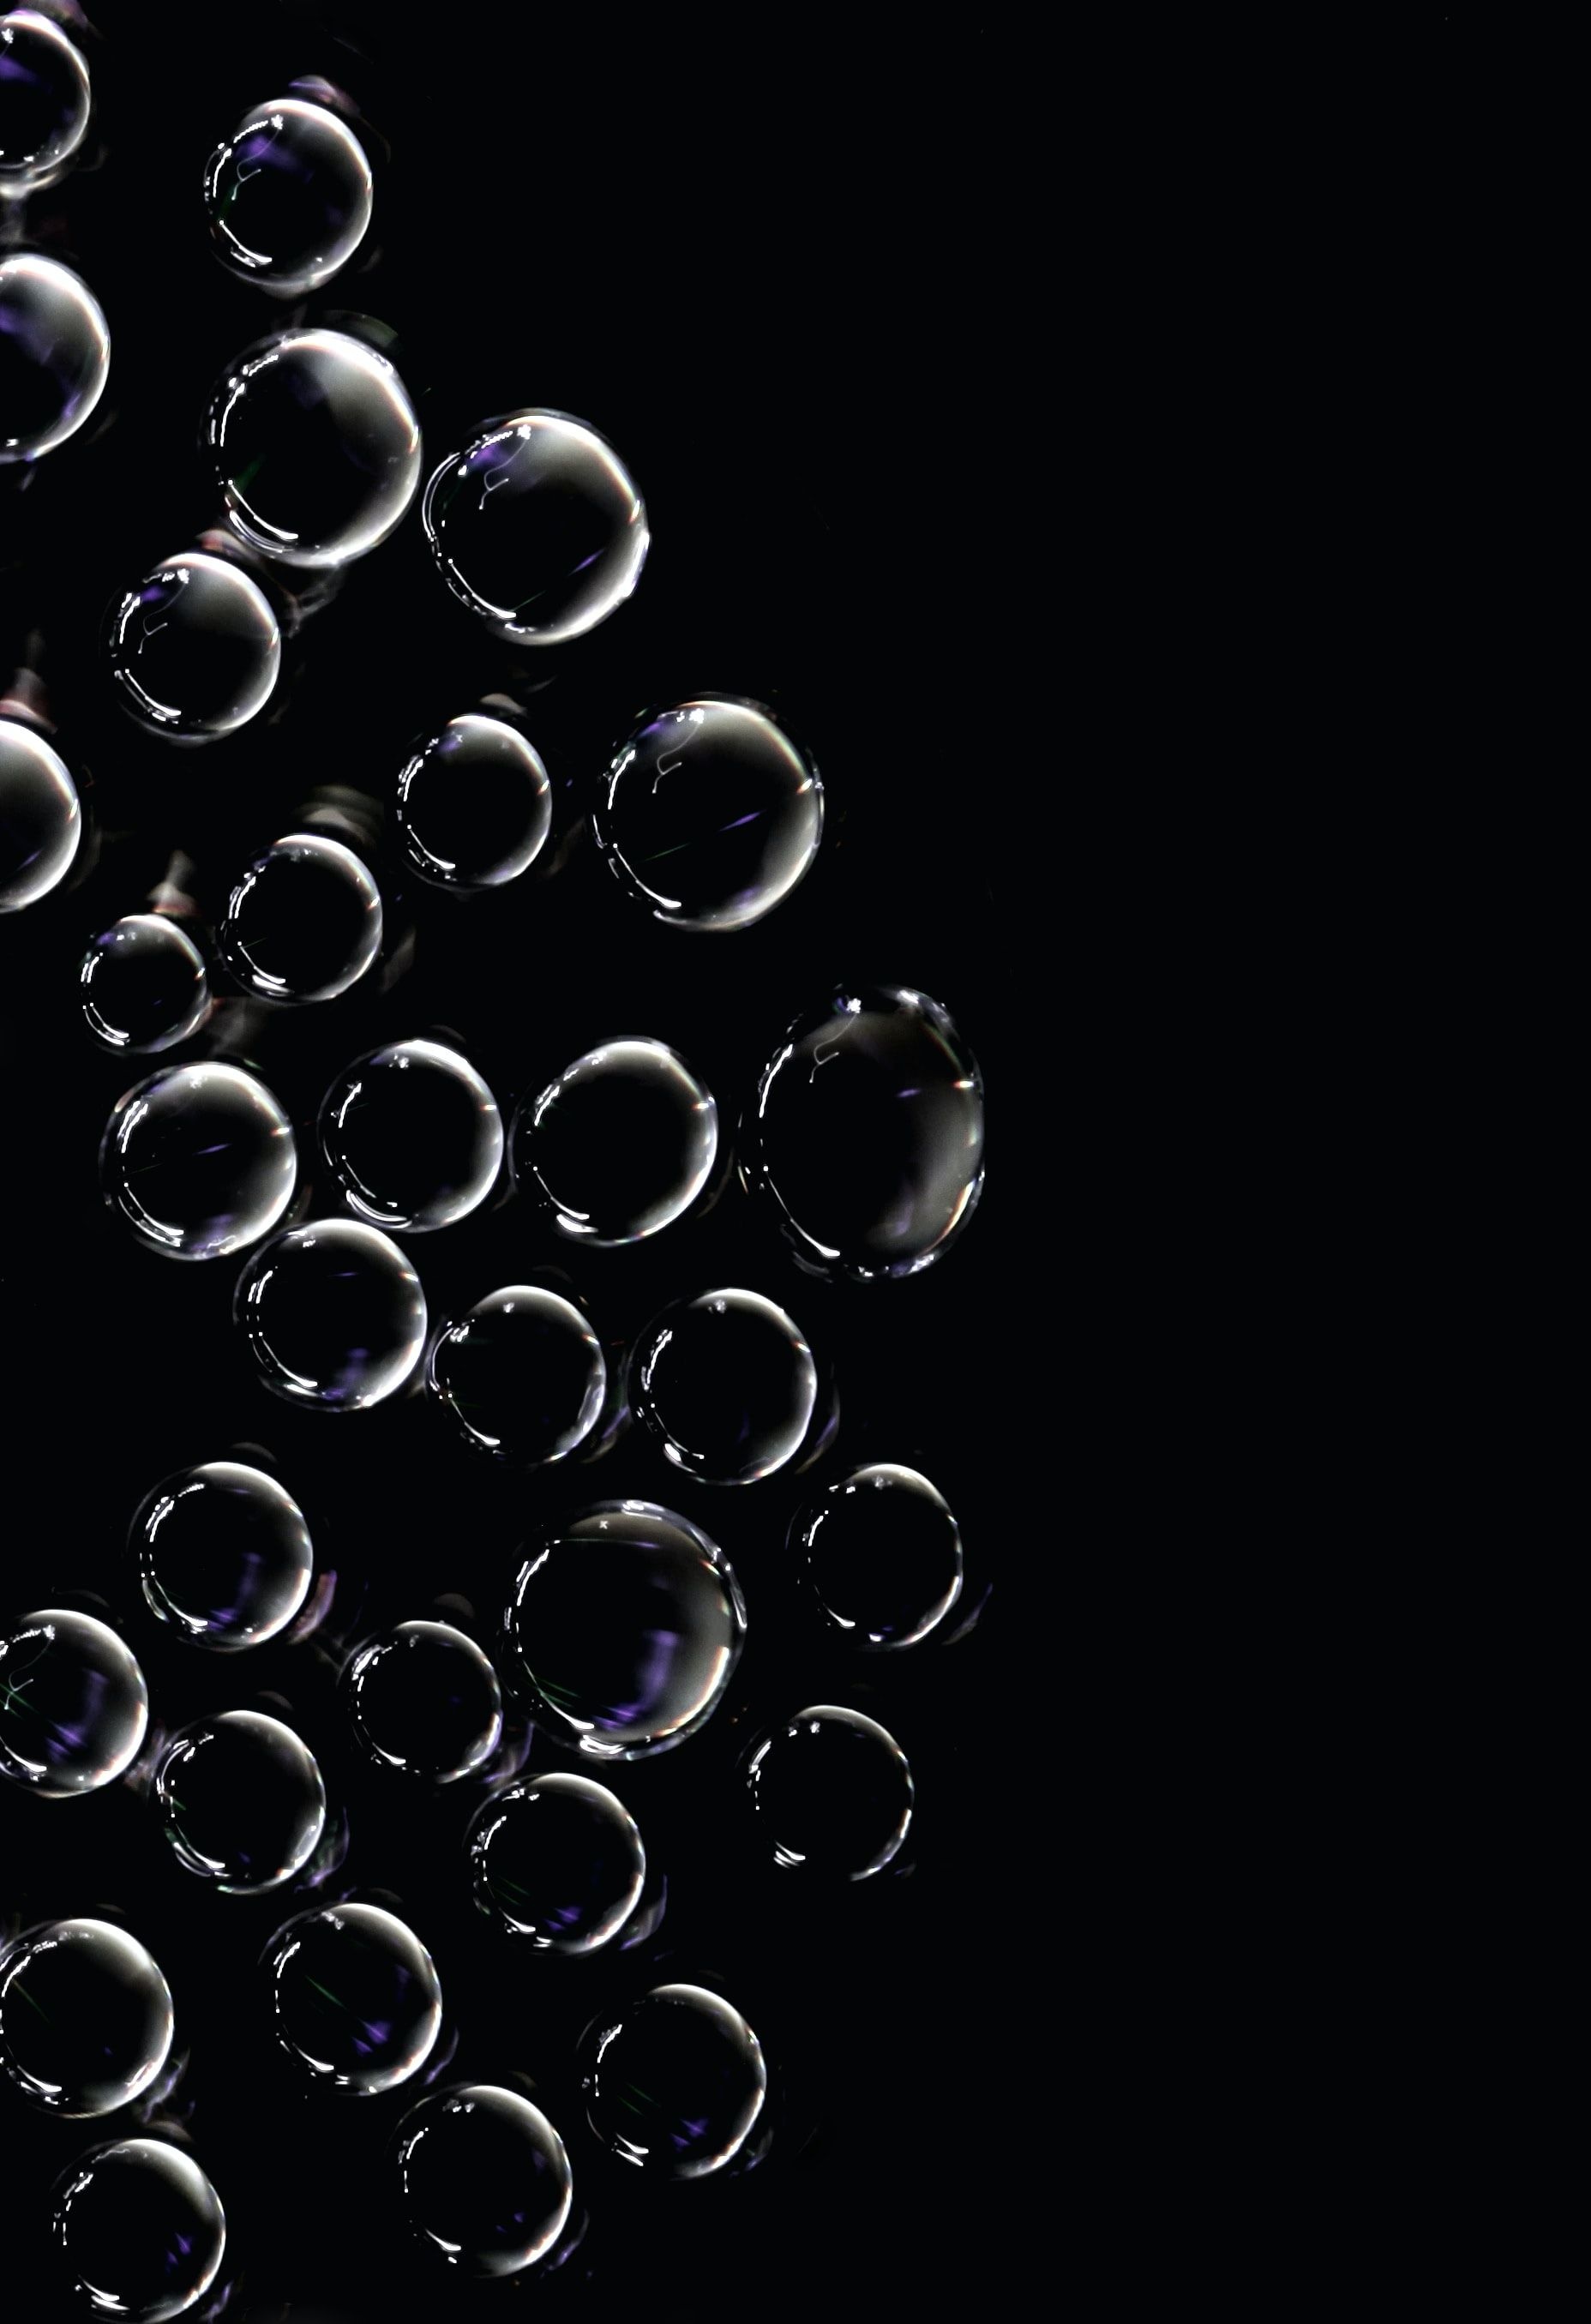 Black bubbles wallpapers, Dark bubble backgrounds, Moody bubble art, Abstract bubbles, Bubble burst, 1860x2720 HD Handy